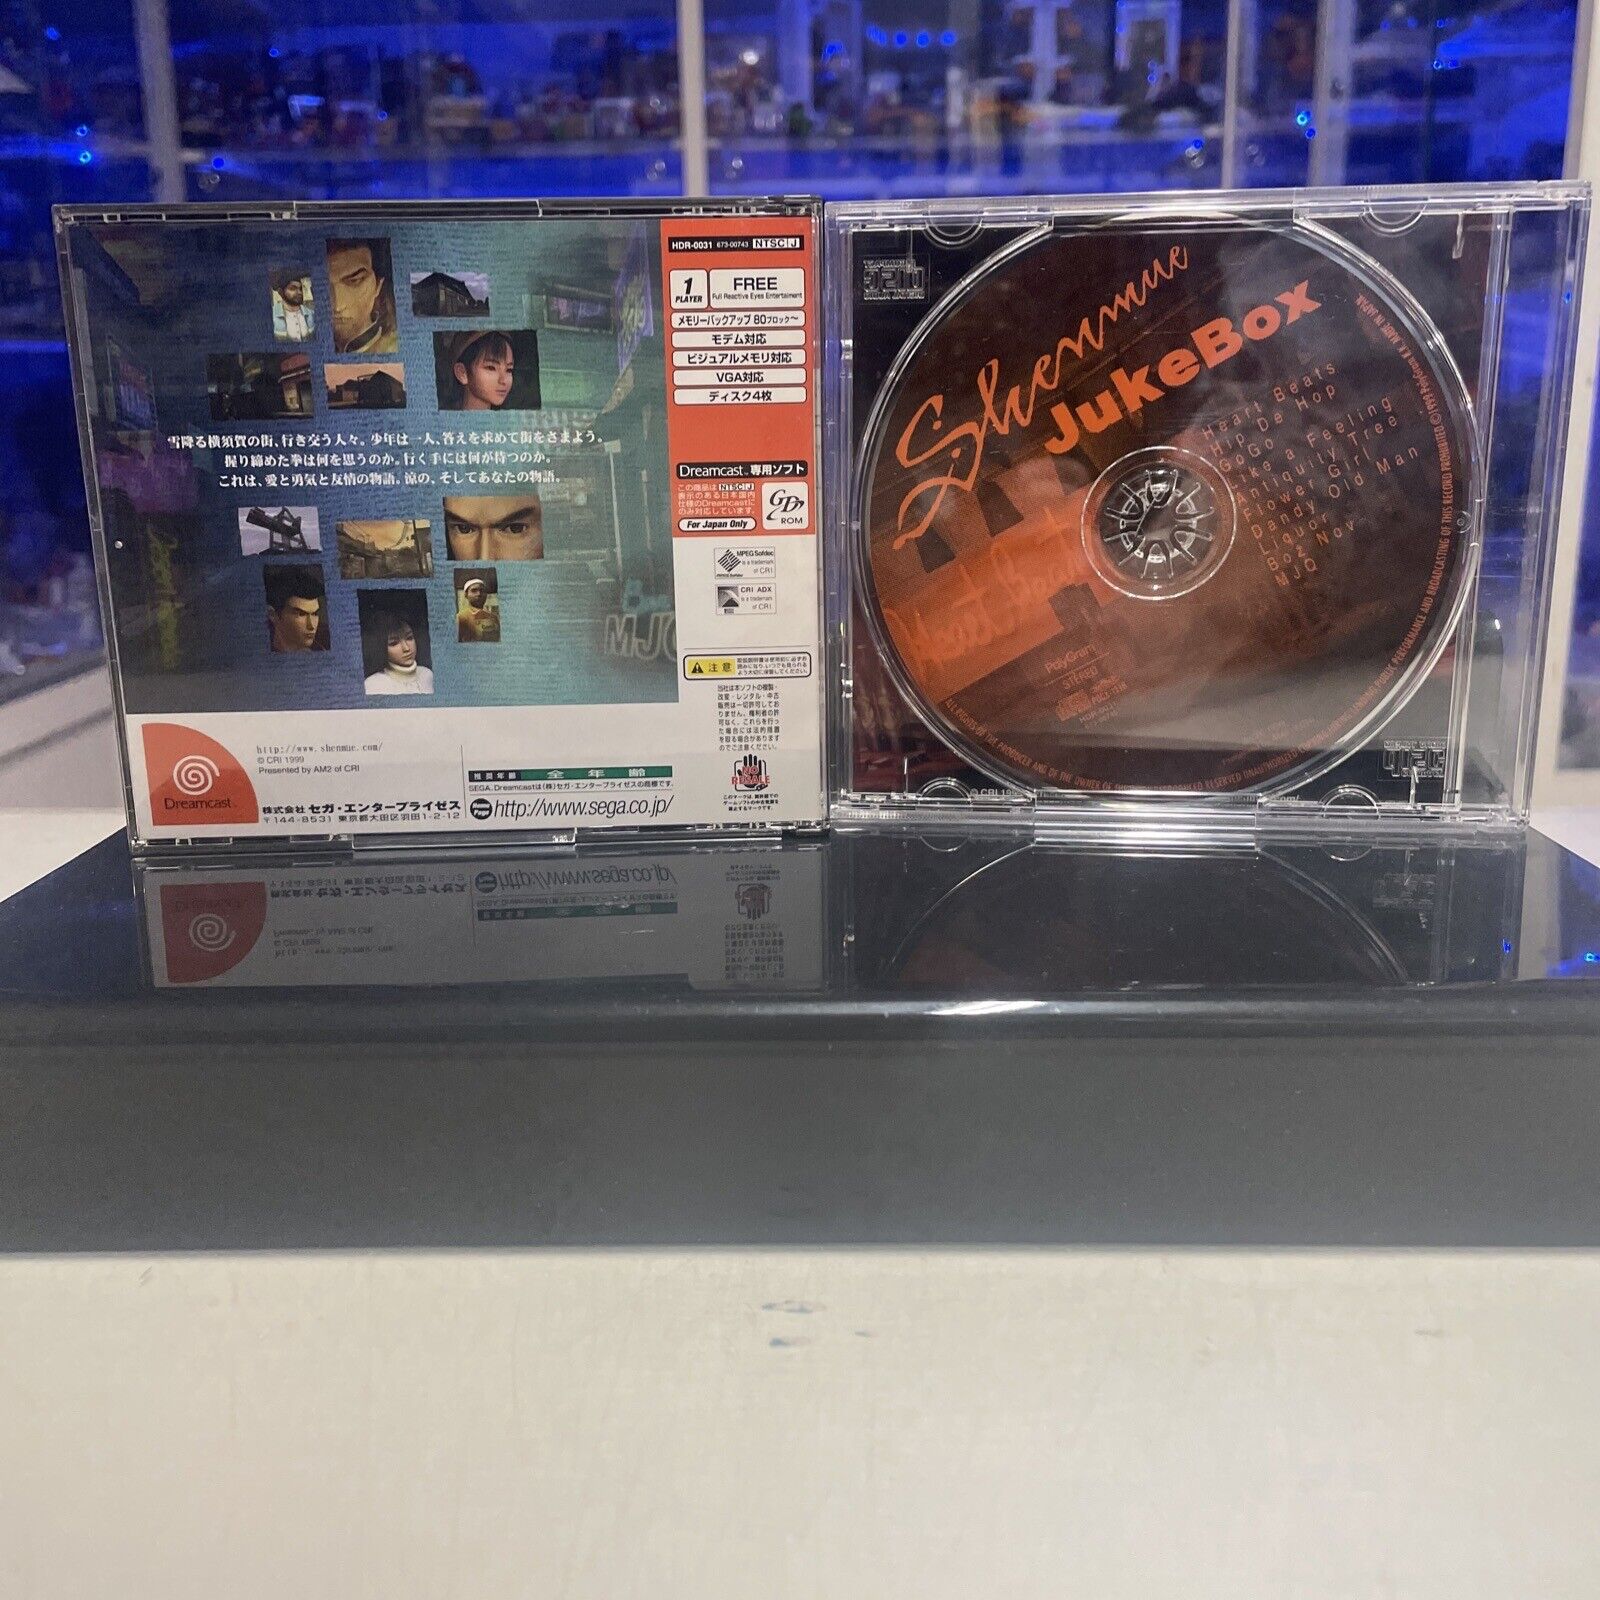 Dreamcast-Shen-Mue-Sega-NTSC-Jap-CD-Jukebox-134887517004-4